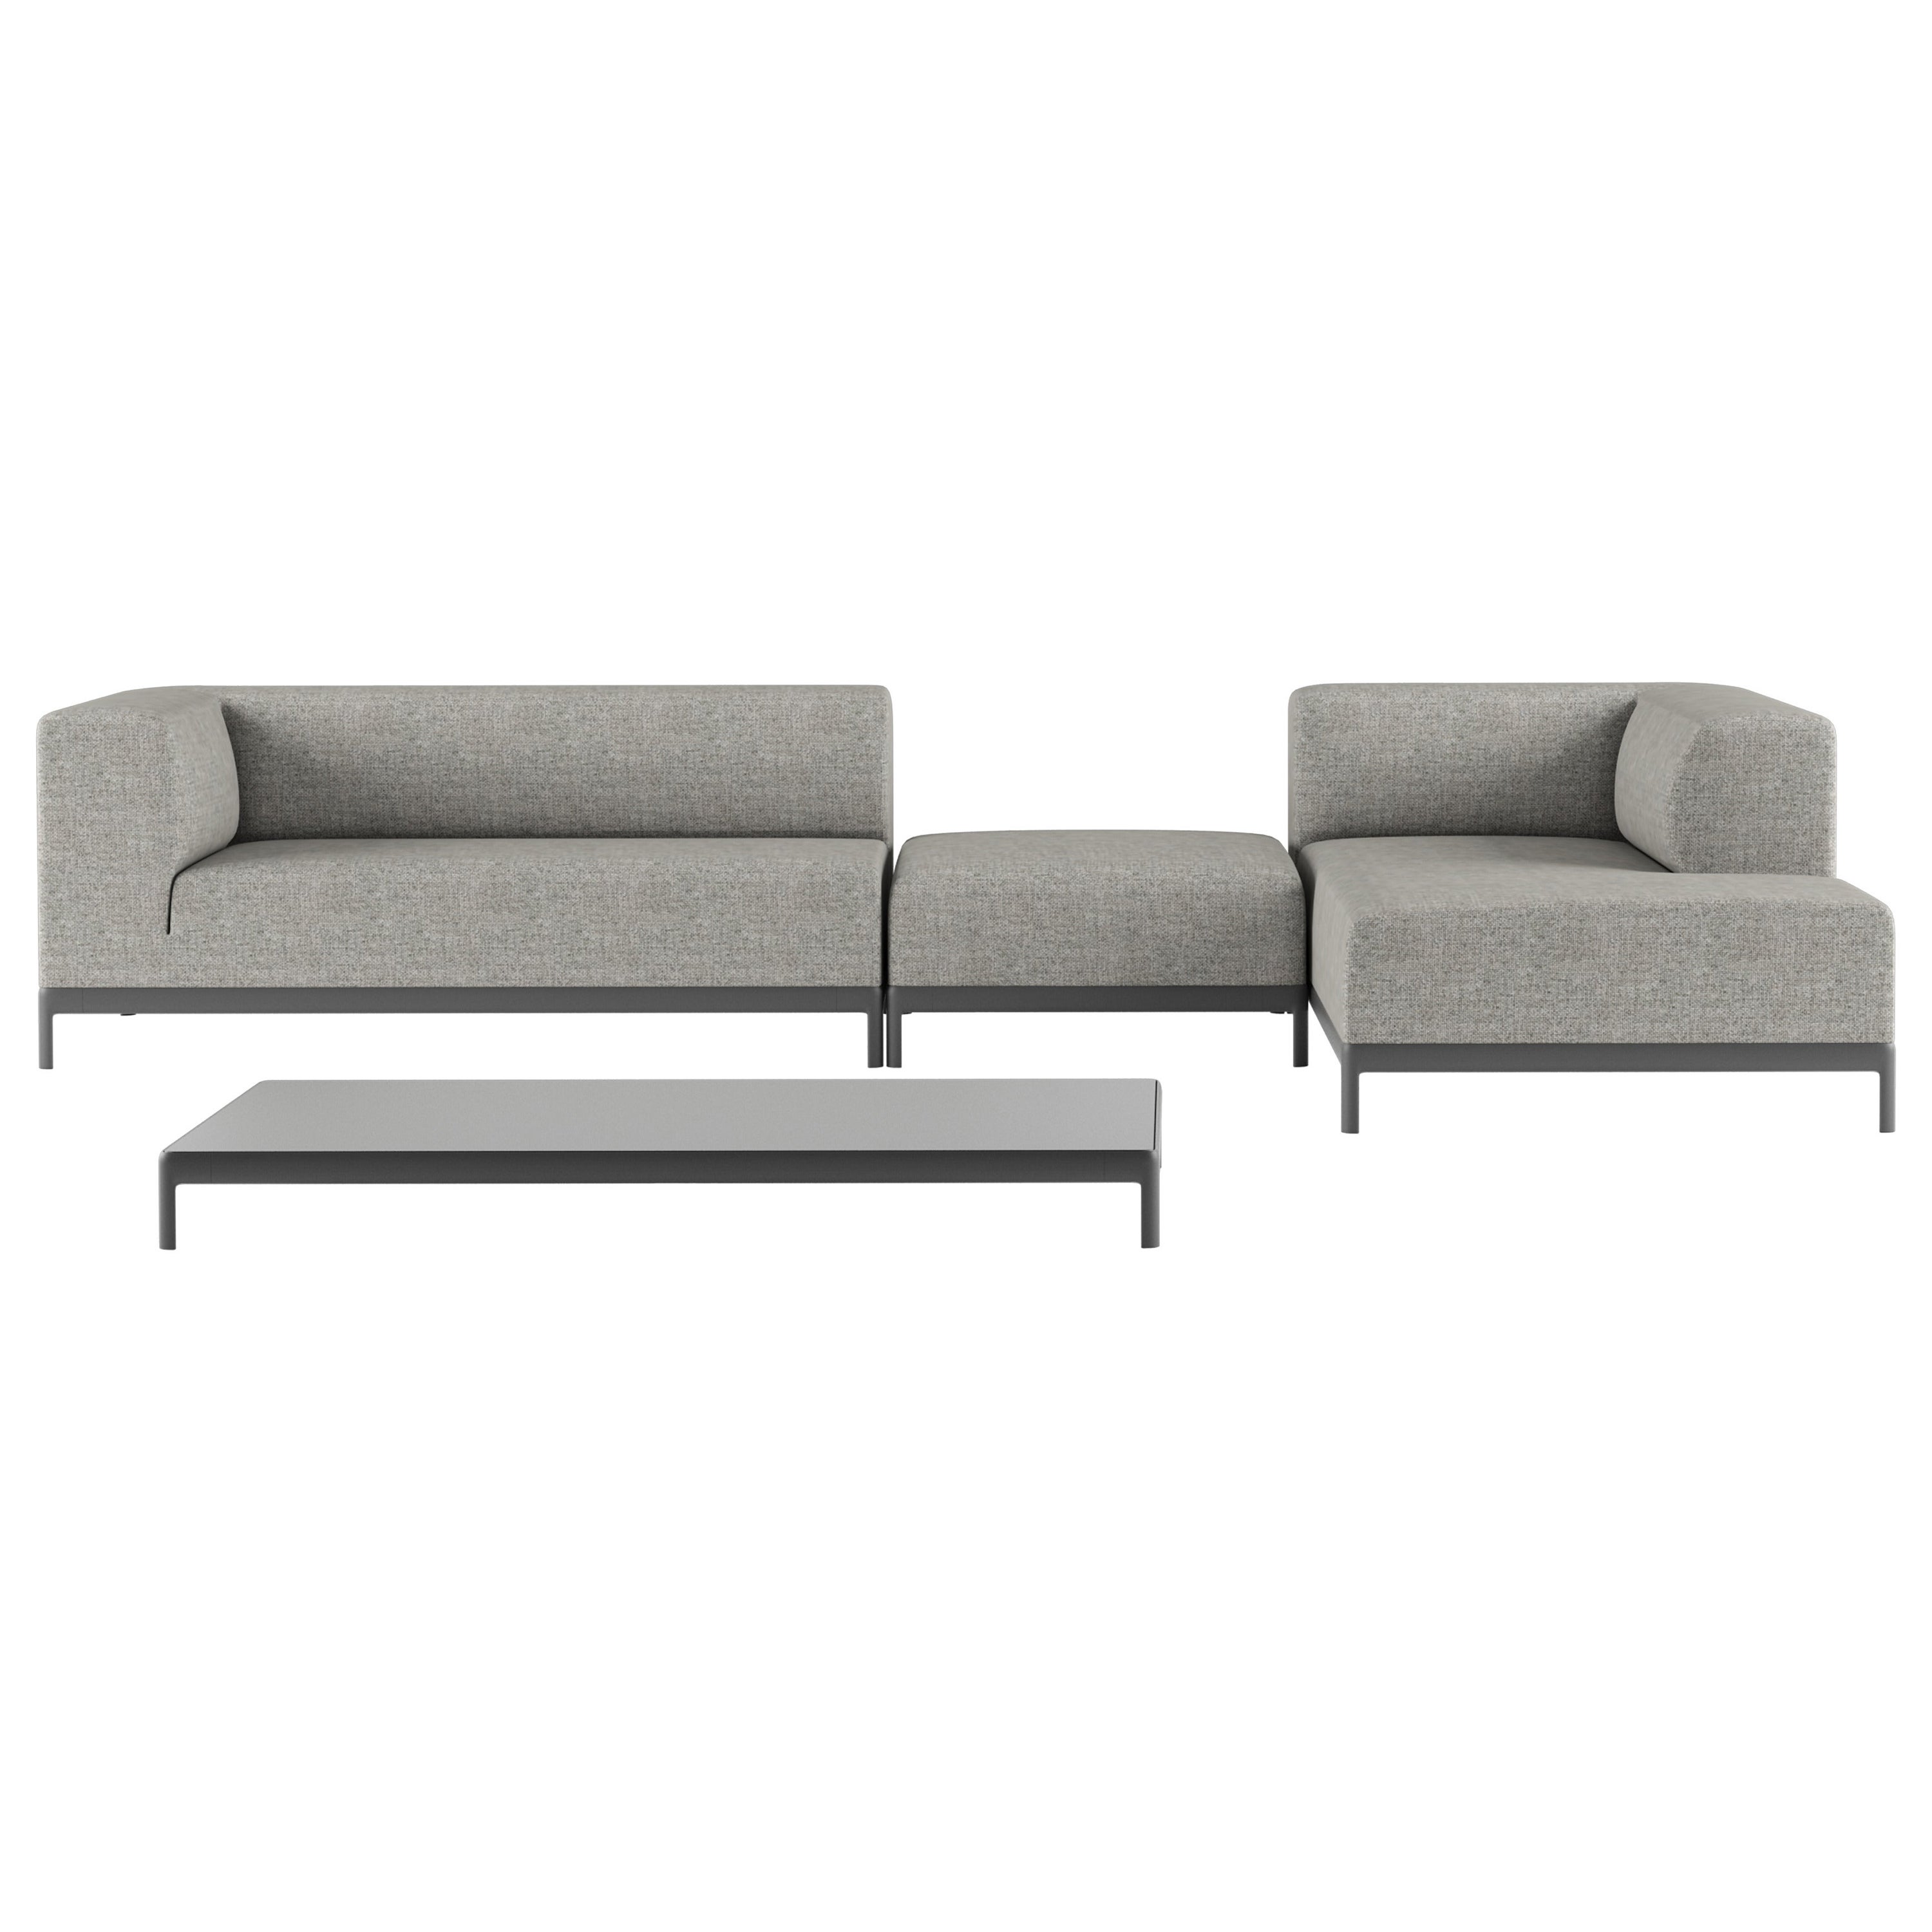 Alias P63+P70+P65+P73 AluZen Soft Sofa Set in Upholstery with Aluminium Frame For Sale